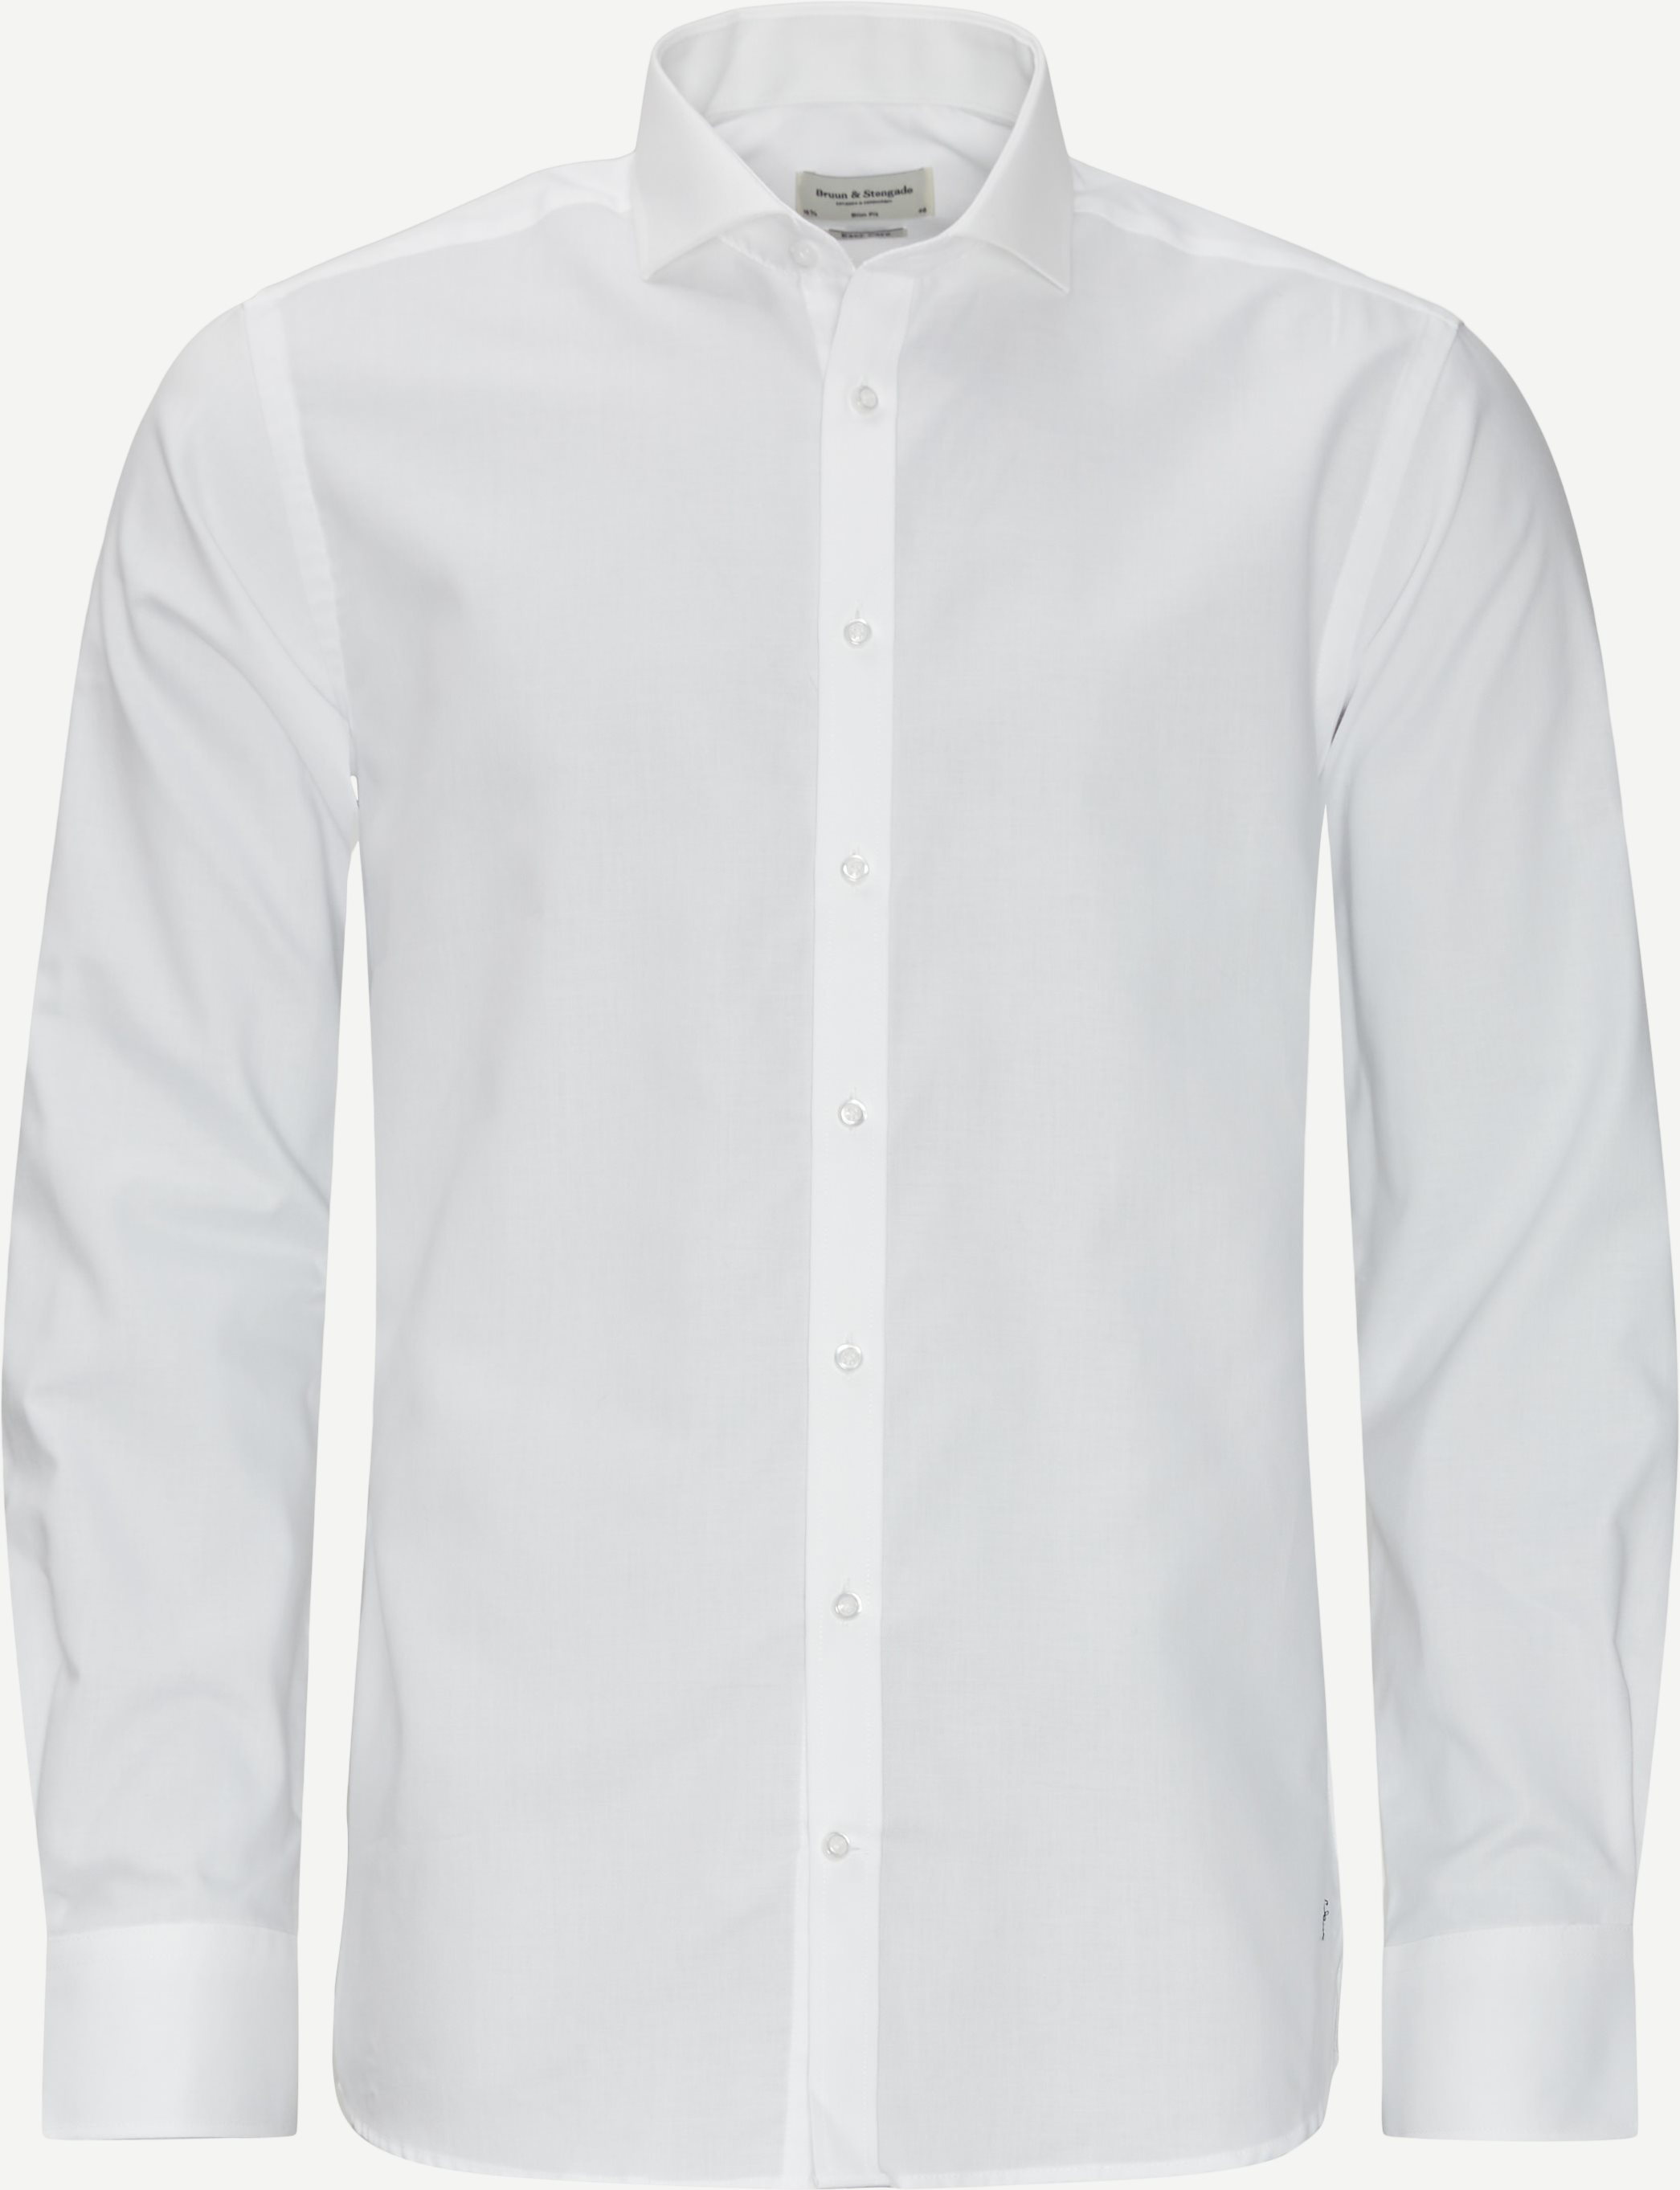 Shirts - Slim fit - White